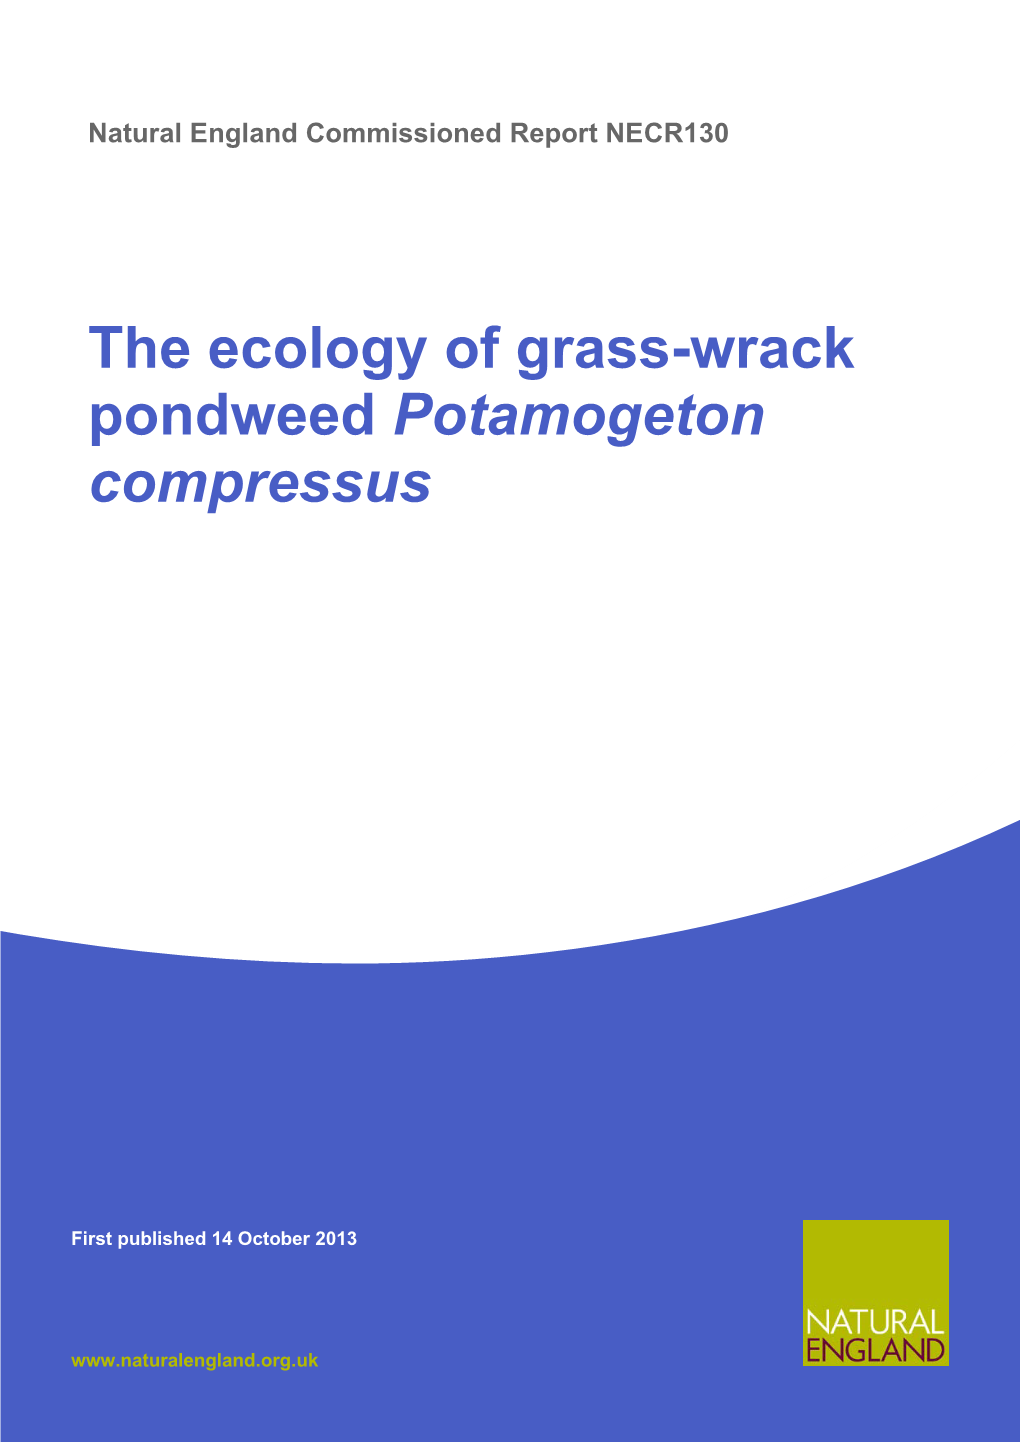 The Ecology of Grass-Wrack Pondweed Potamogeton Compressus